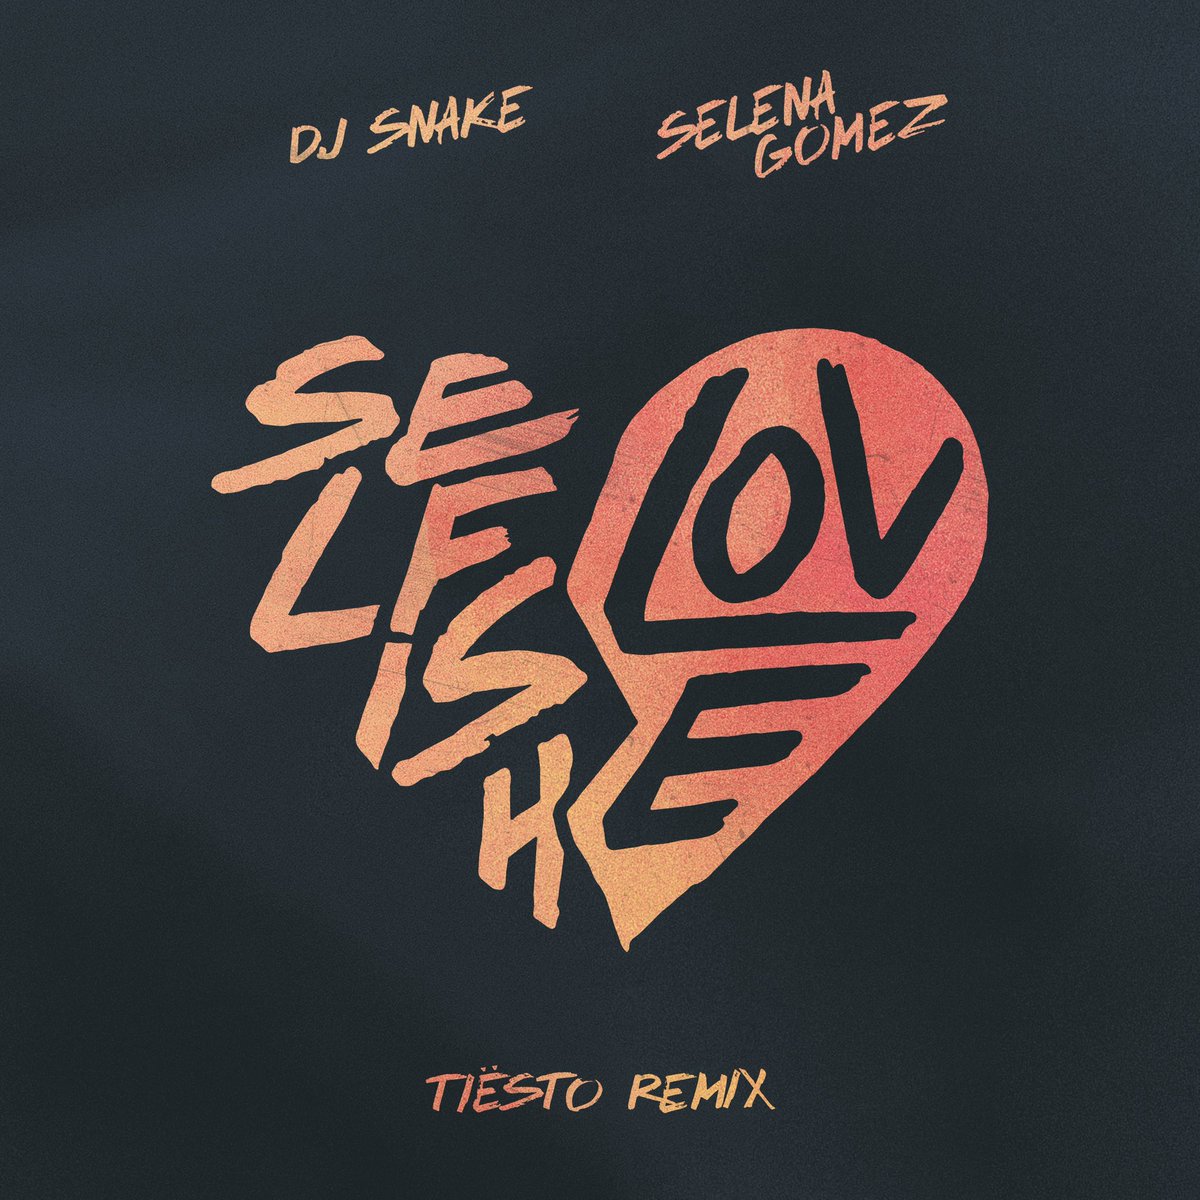 “Selfish Love” @tiesto remix - Out Tomorrow